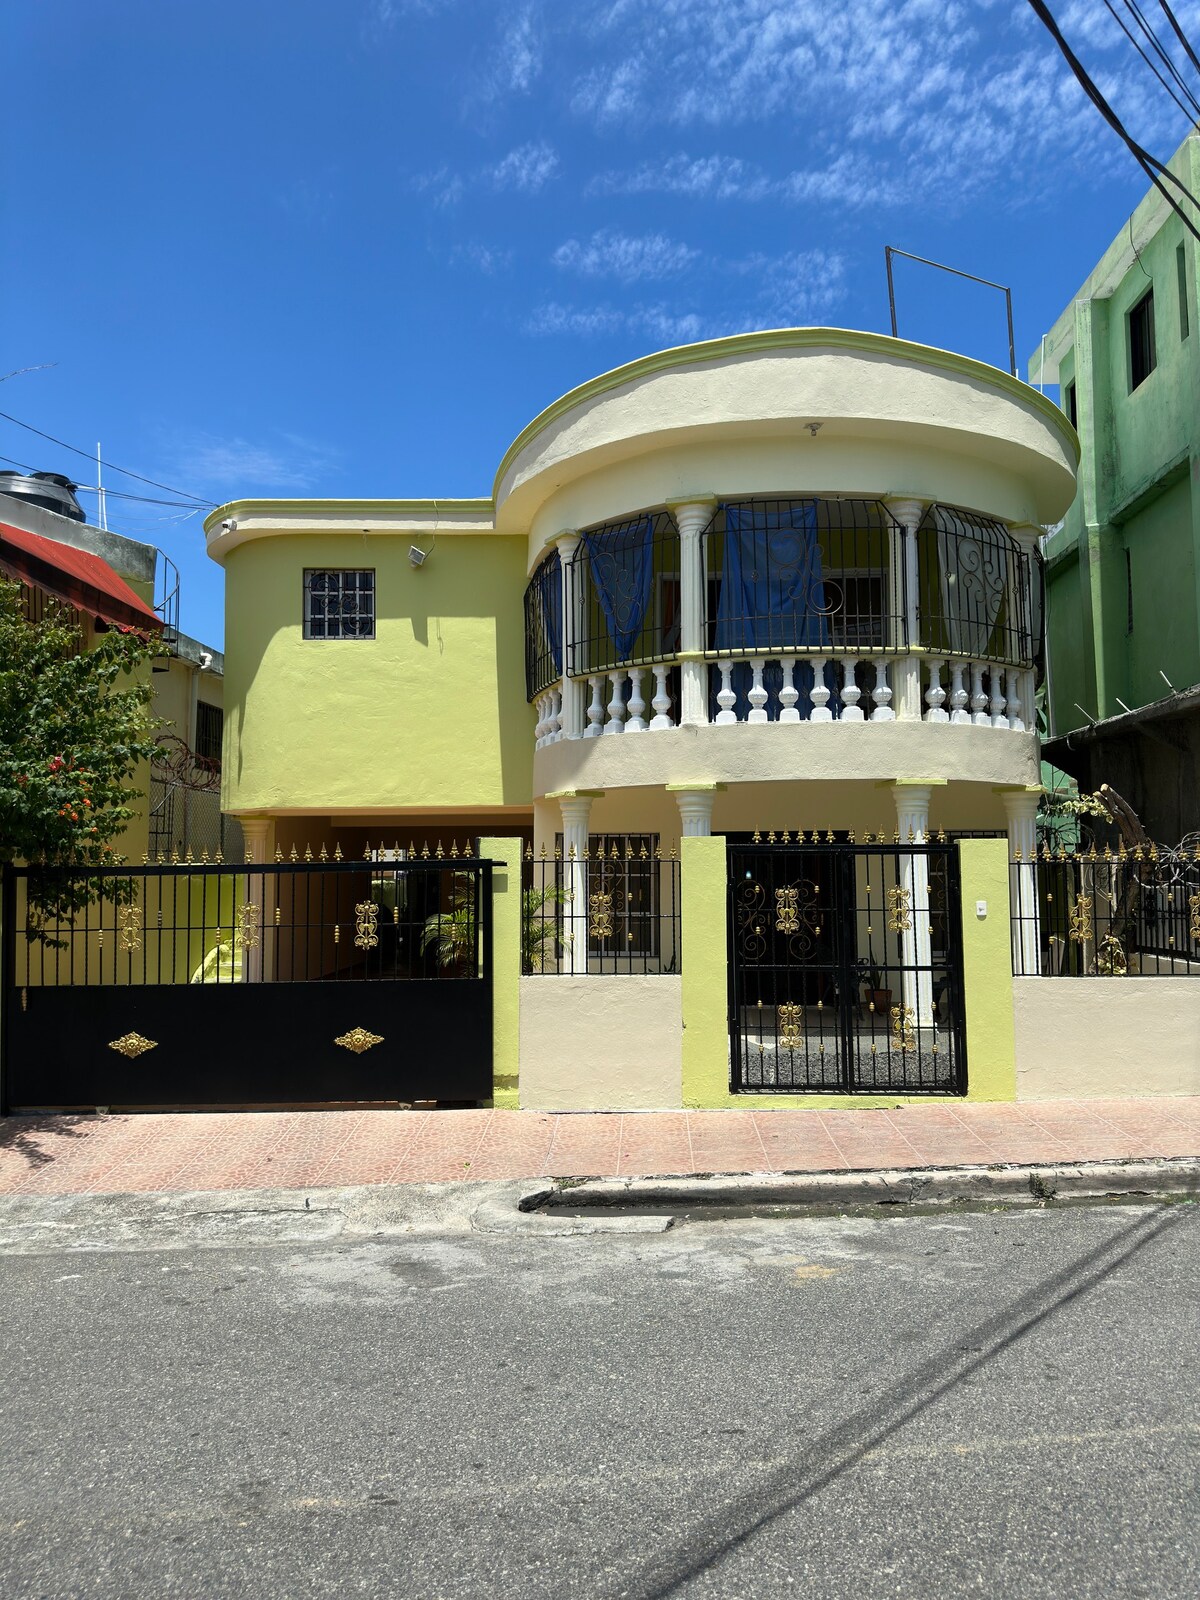 Soyonara exclusive house En yaguate San cristobal